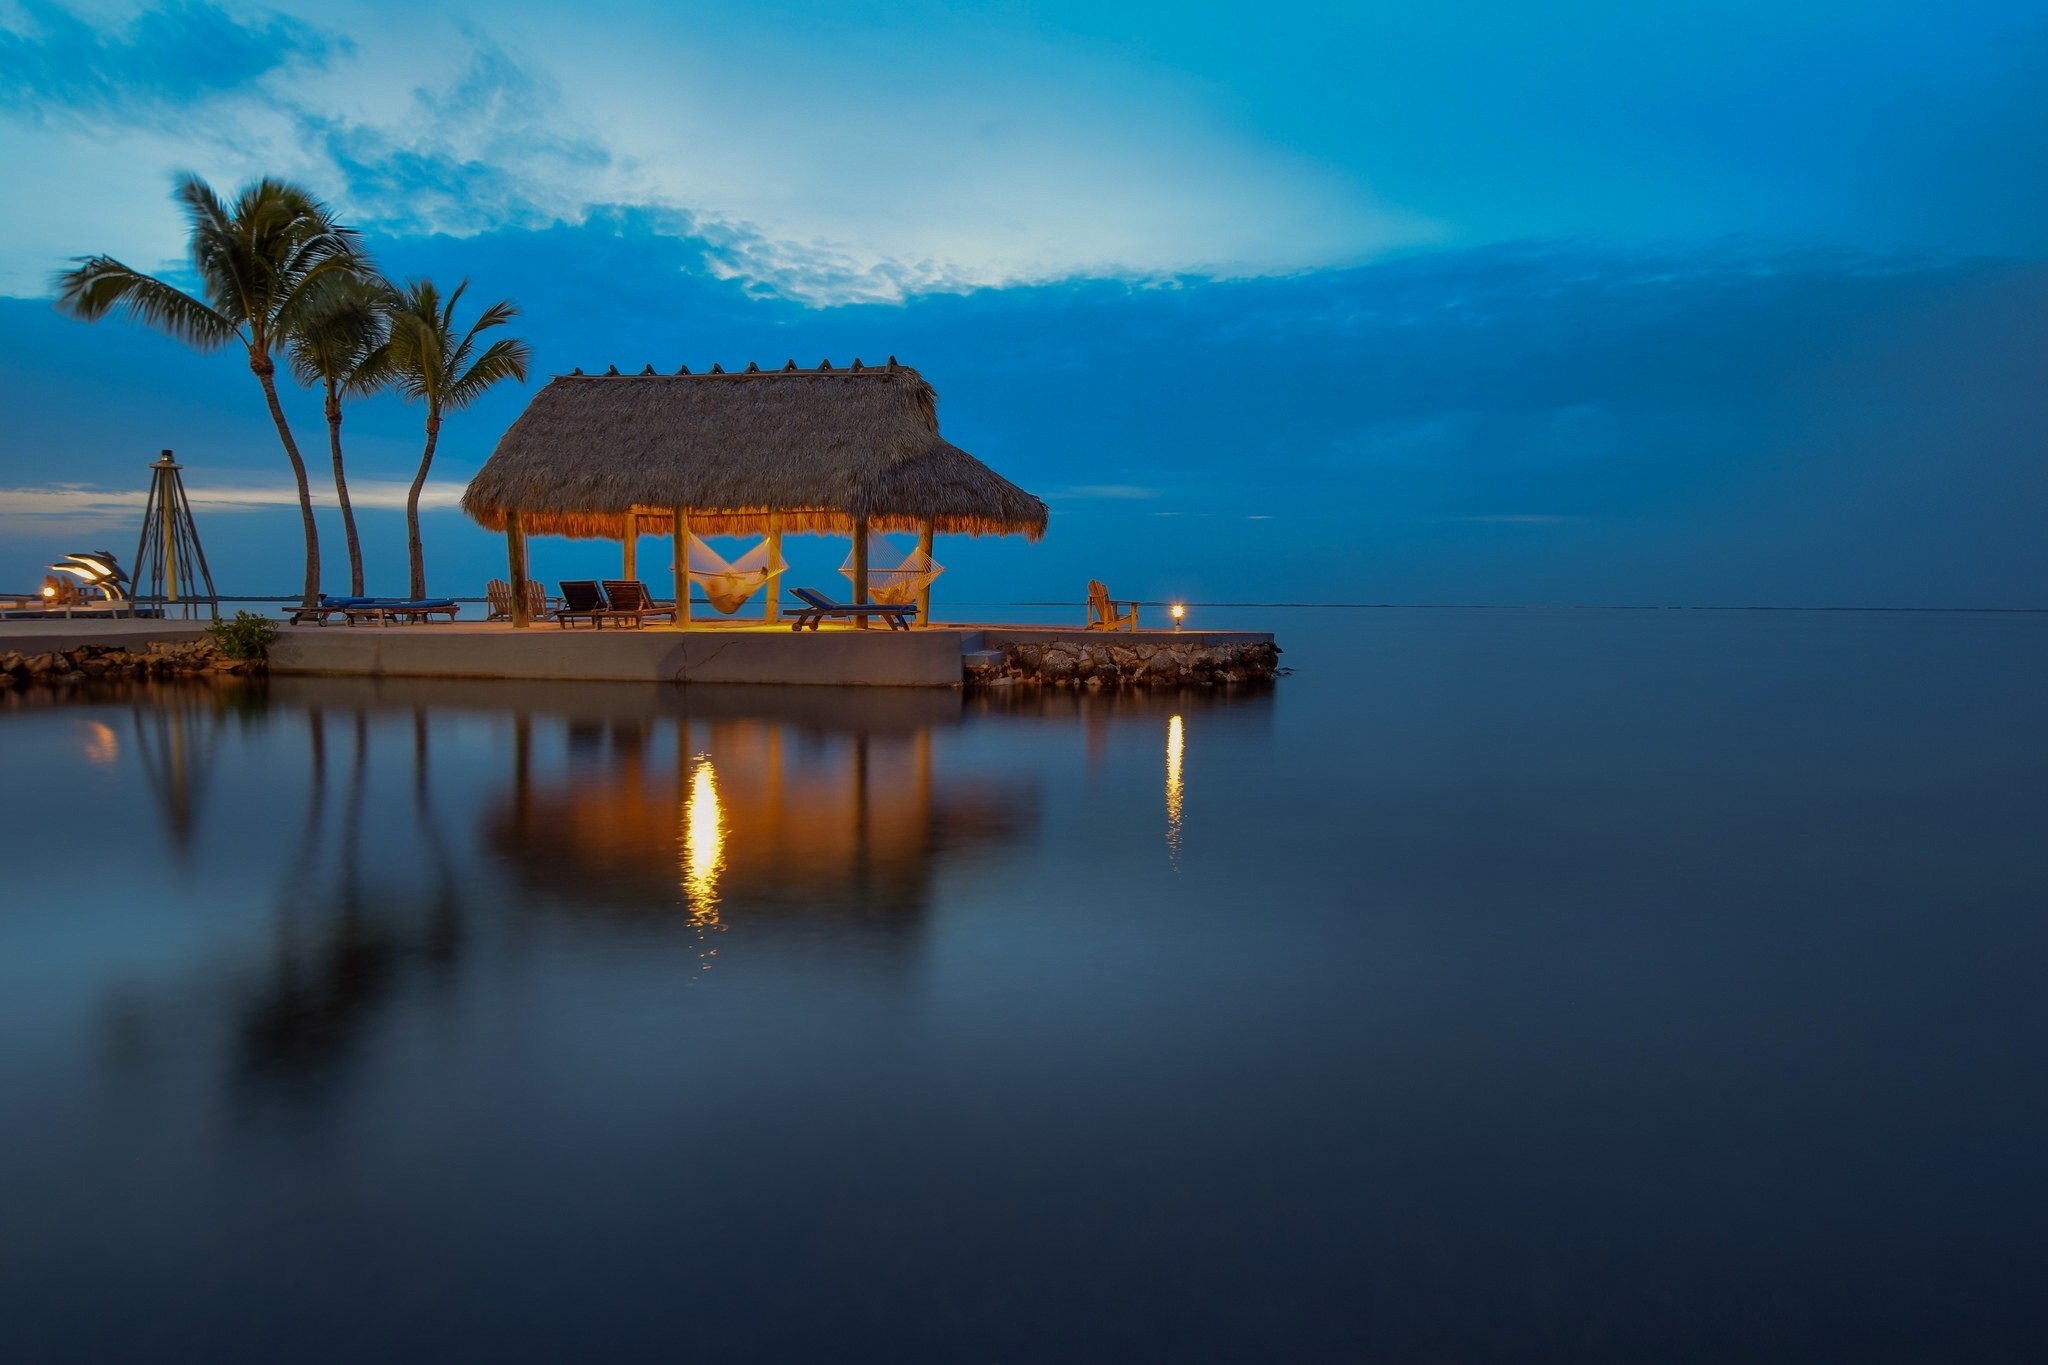 Man Made Resort Bungalow Hut Hammock Palm Tree Ocean Tropical Horizon 2048x1365